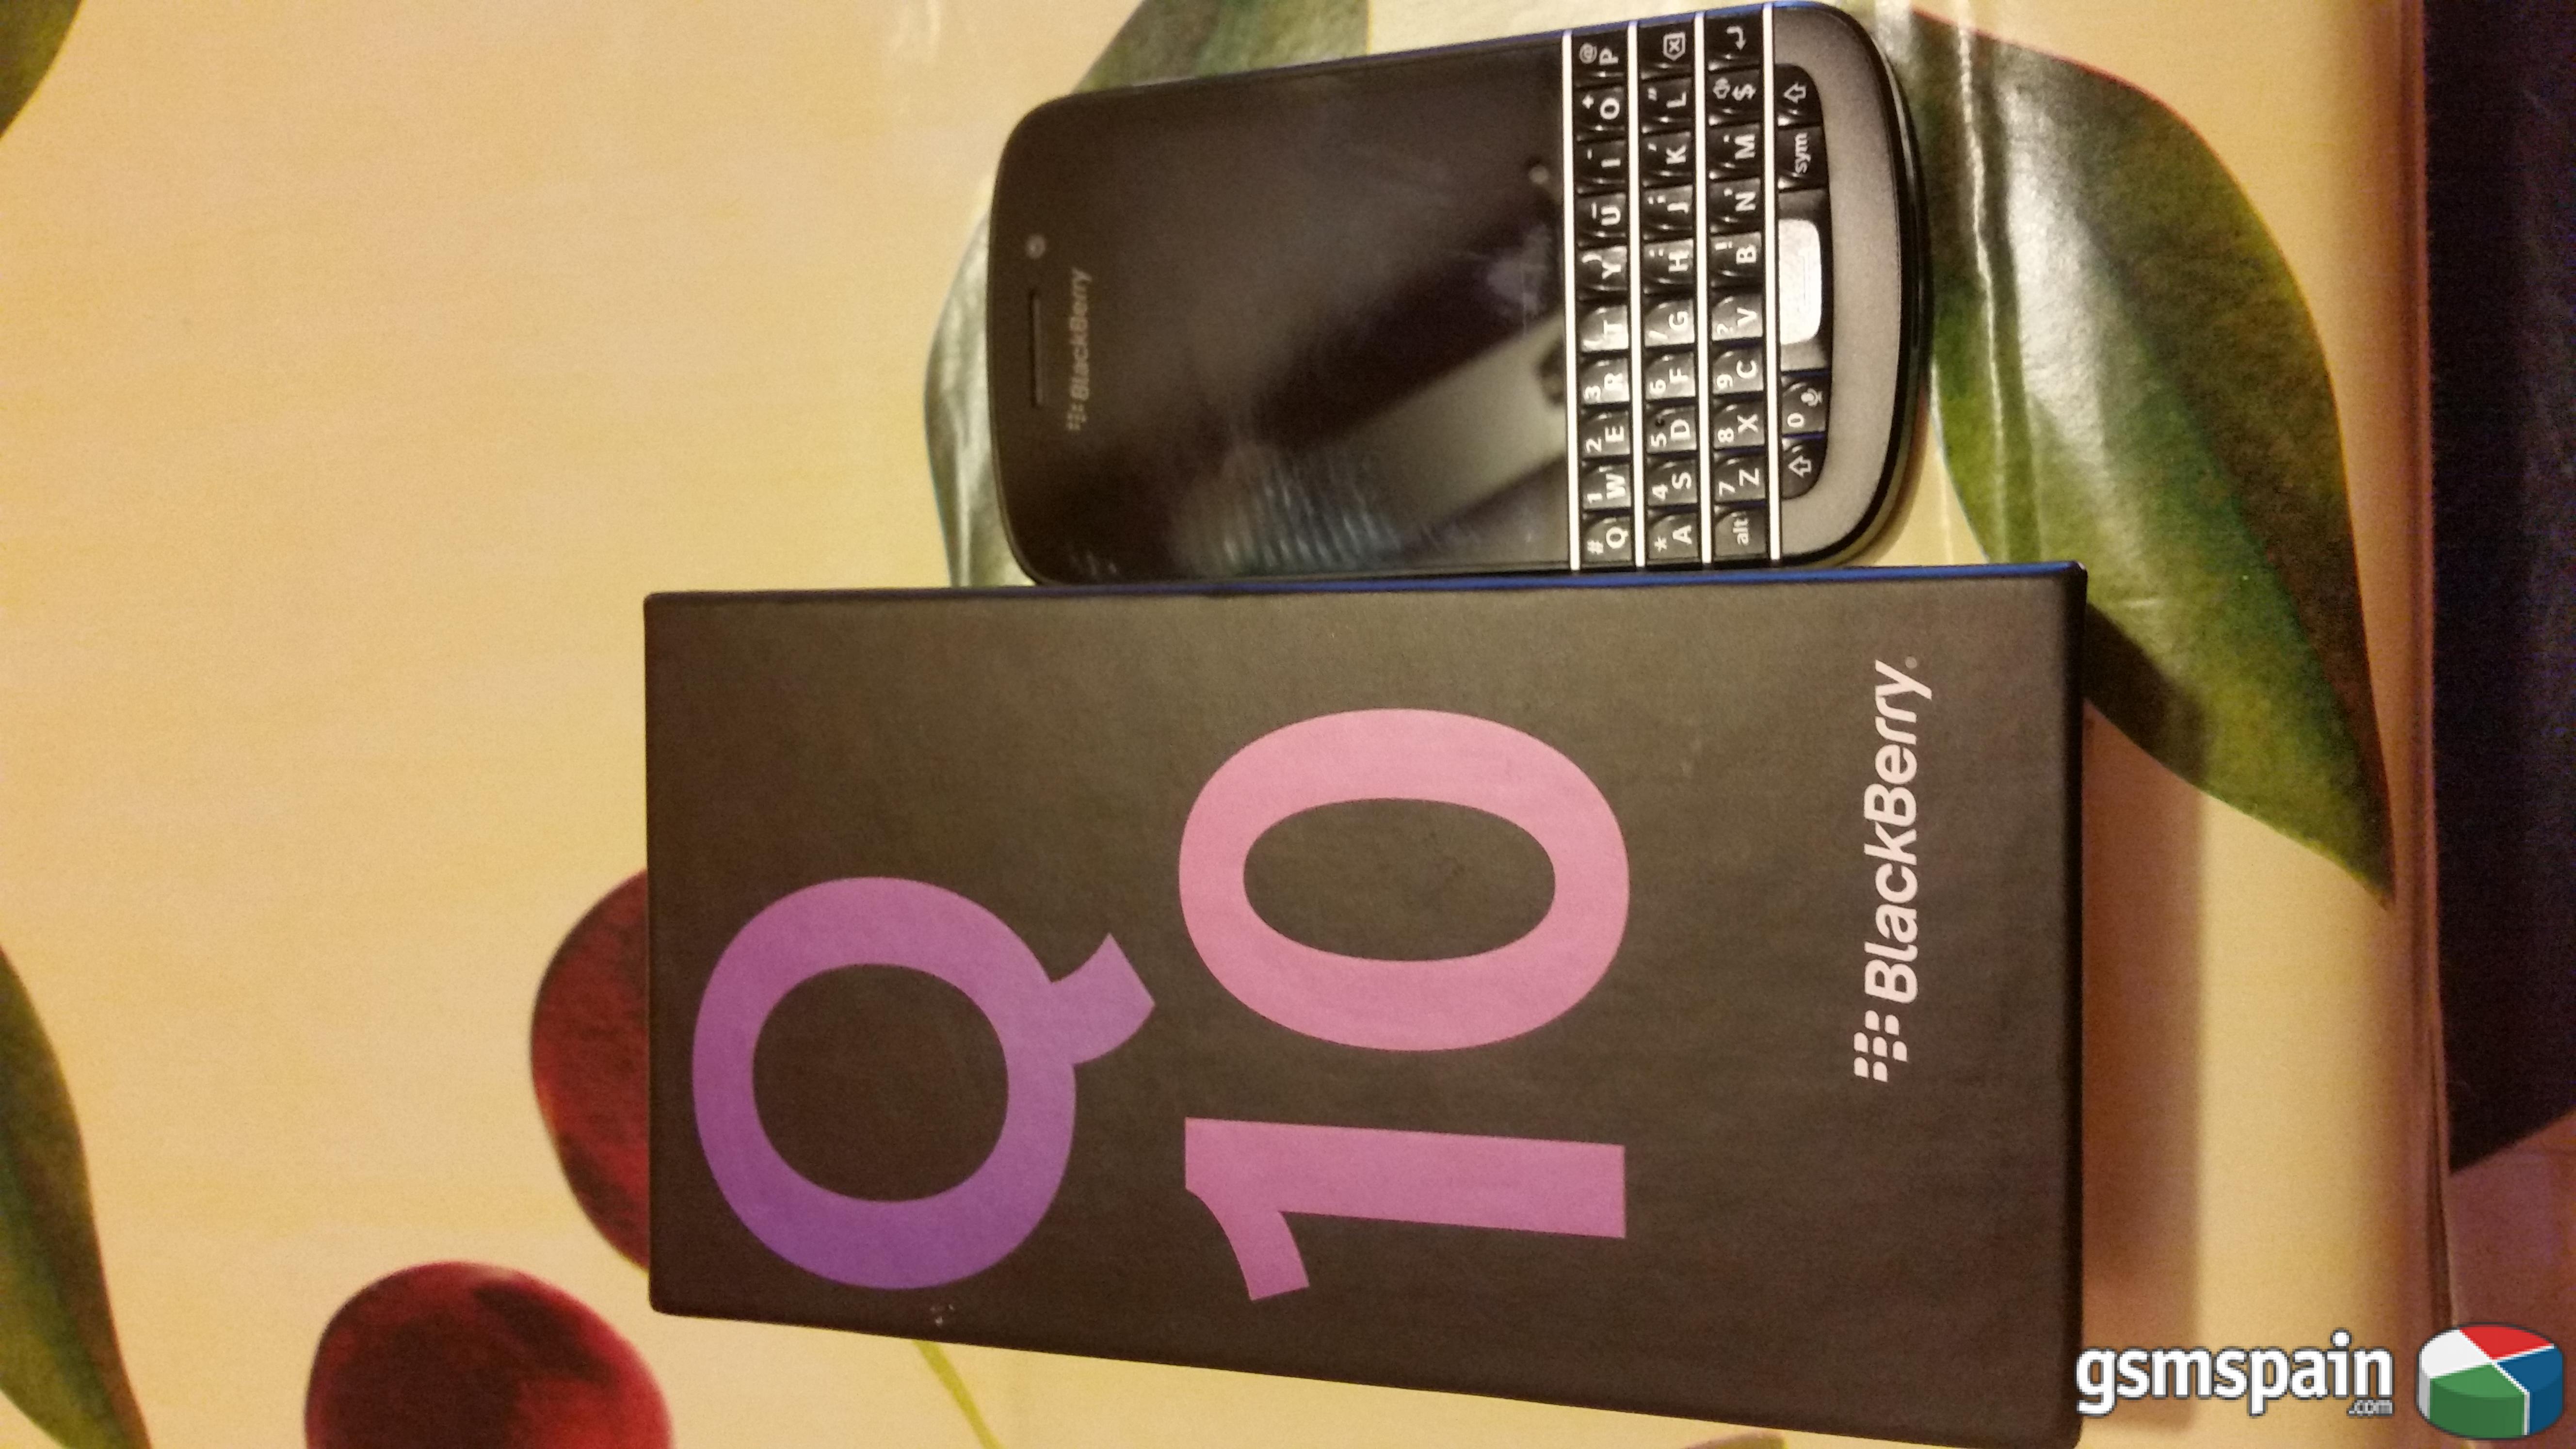 [VENDO] Blackberry Q10 libre